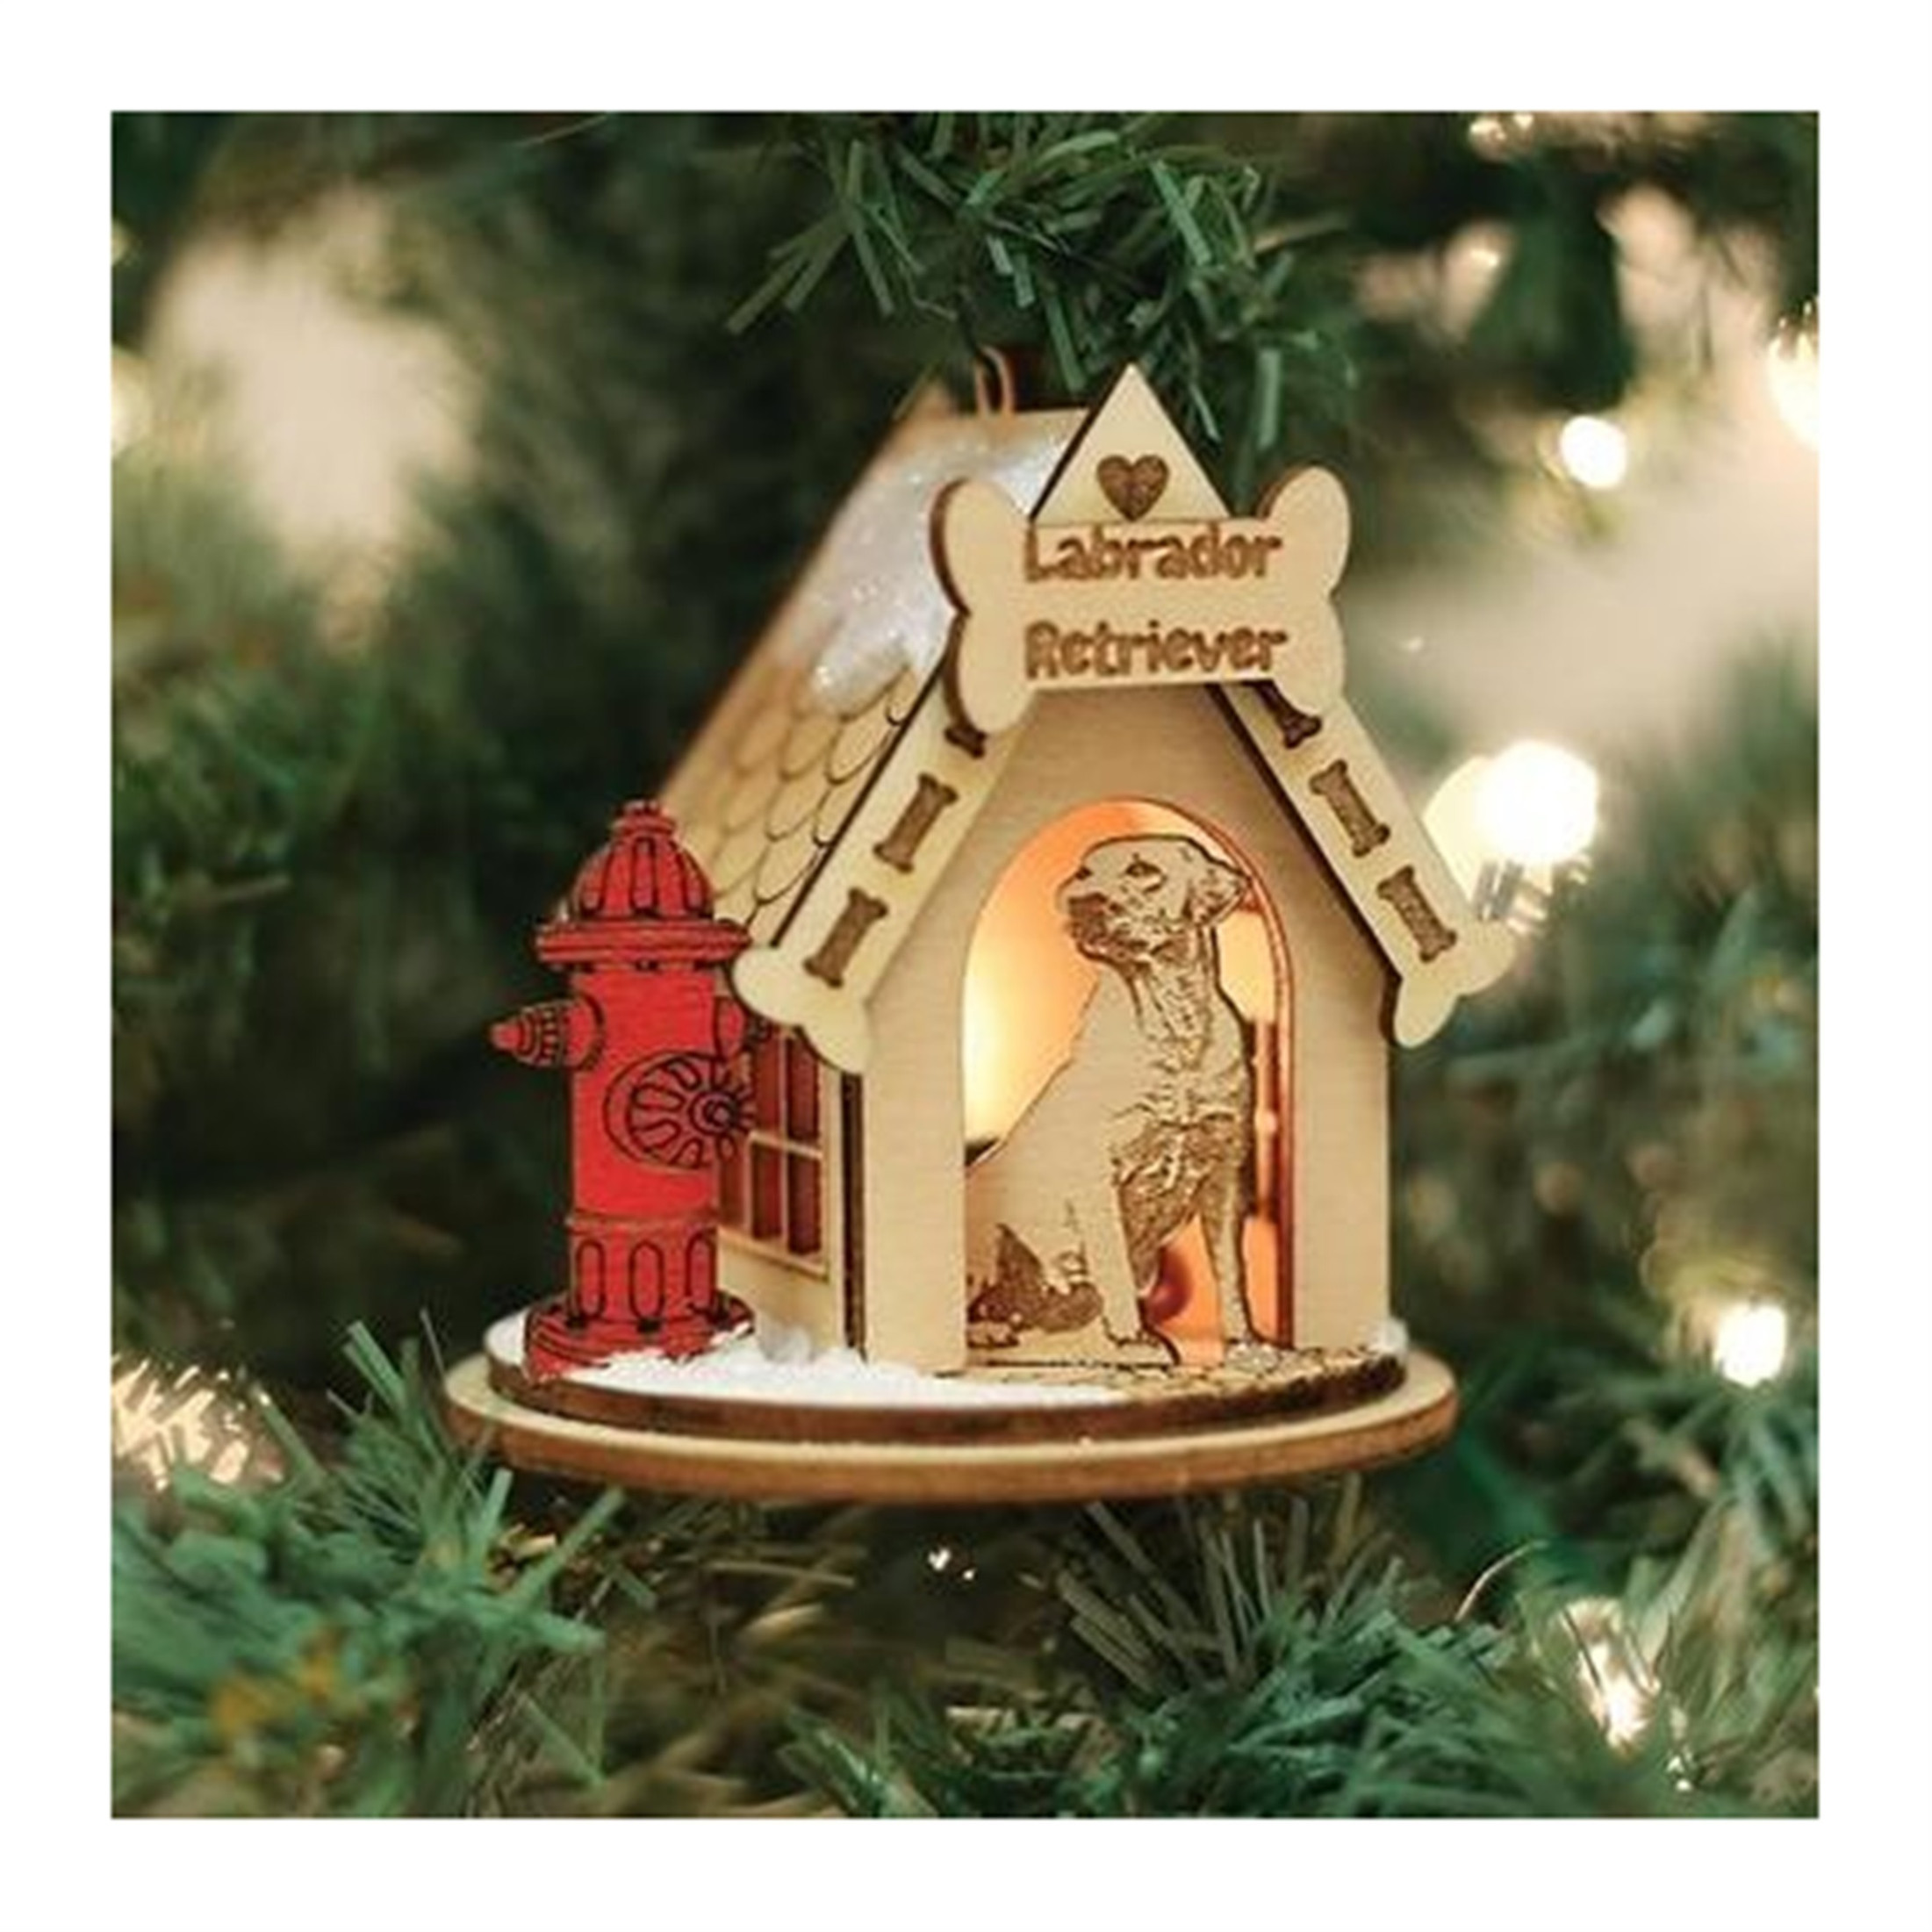 Old World Christmas Ginger Cottages Ornament, Labrador Retriever